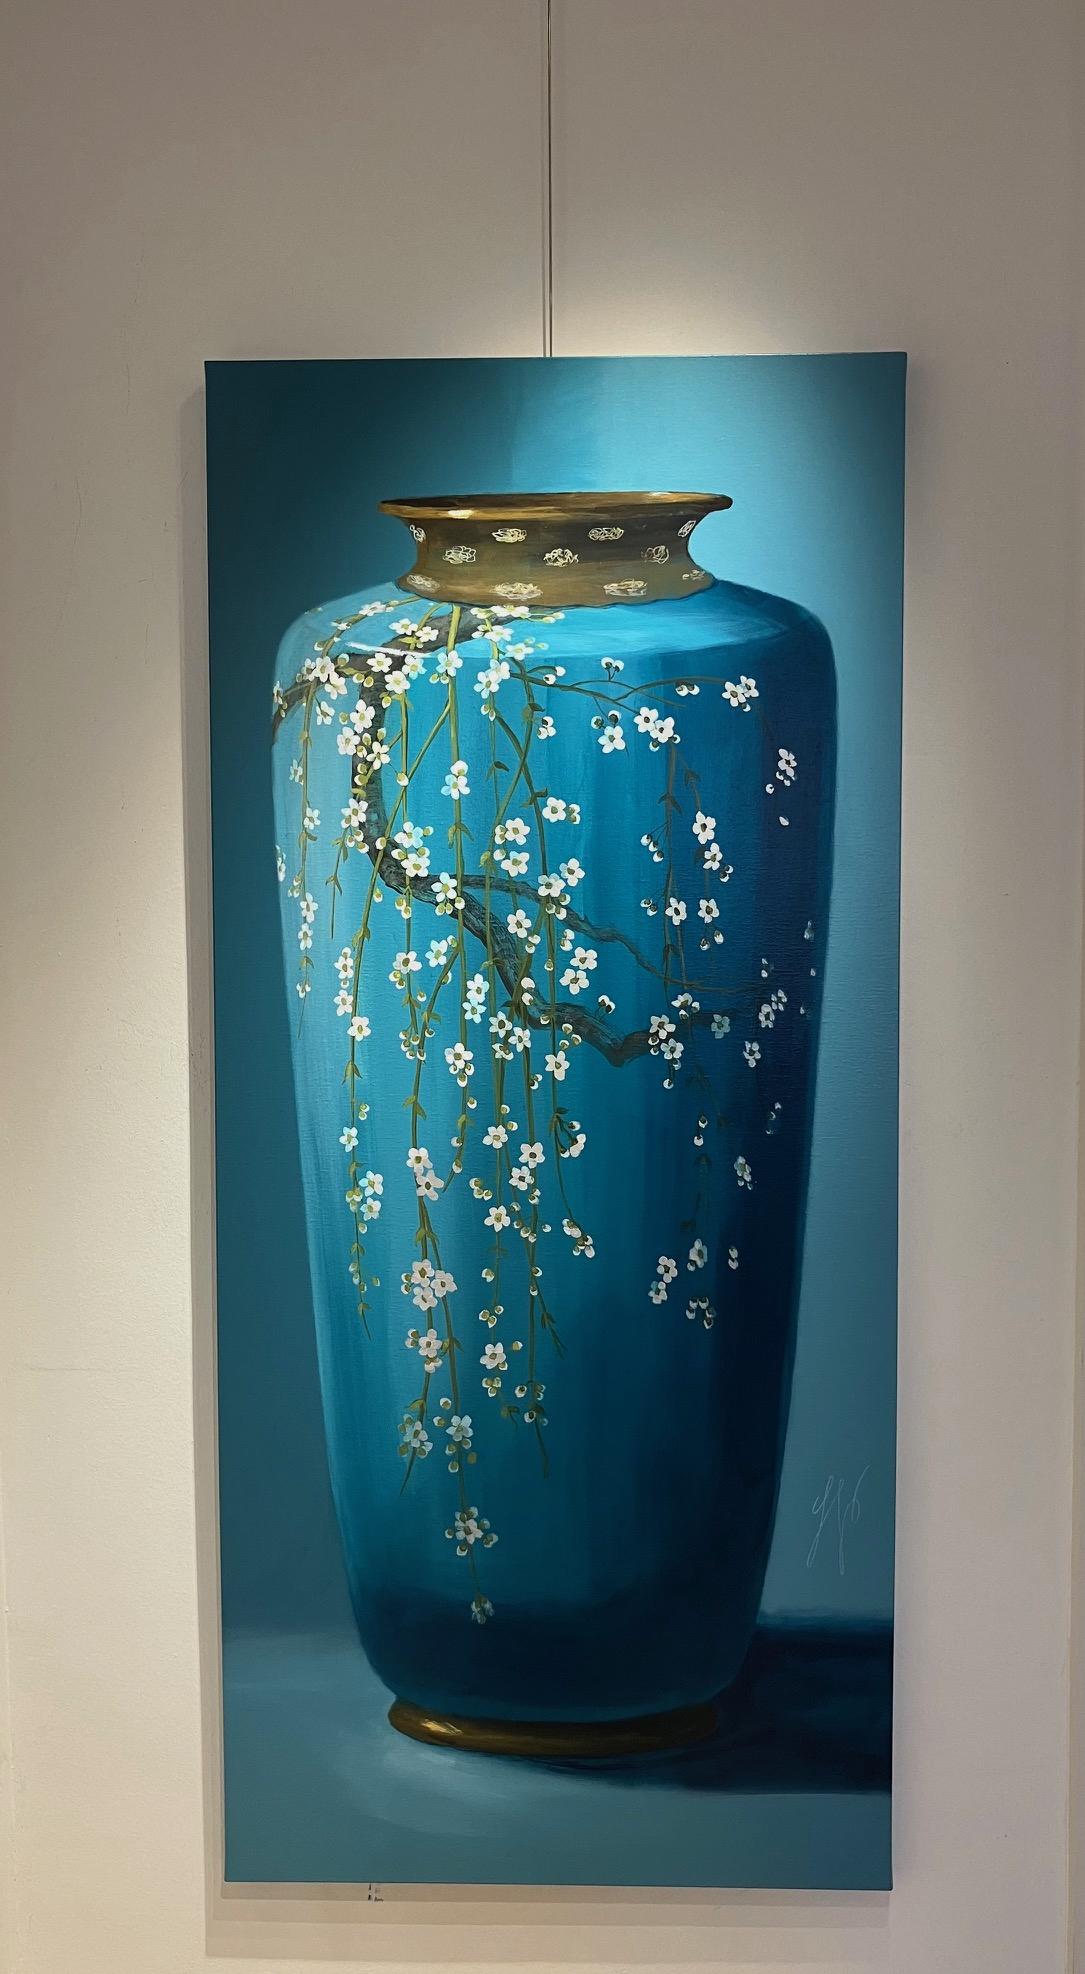 Türkisfarbene Vase